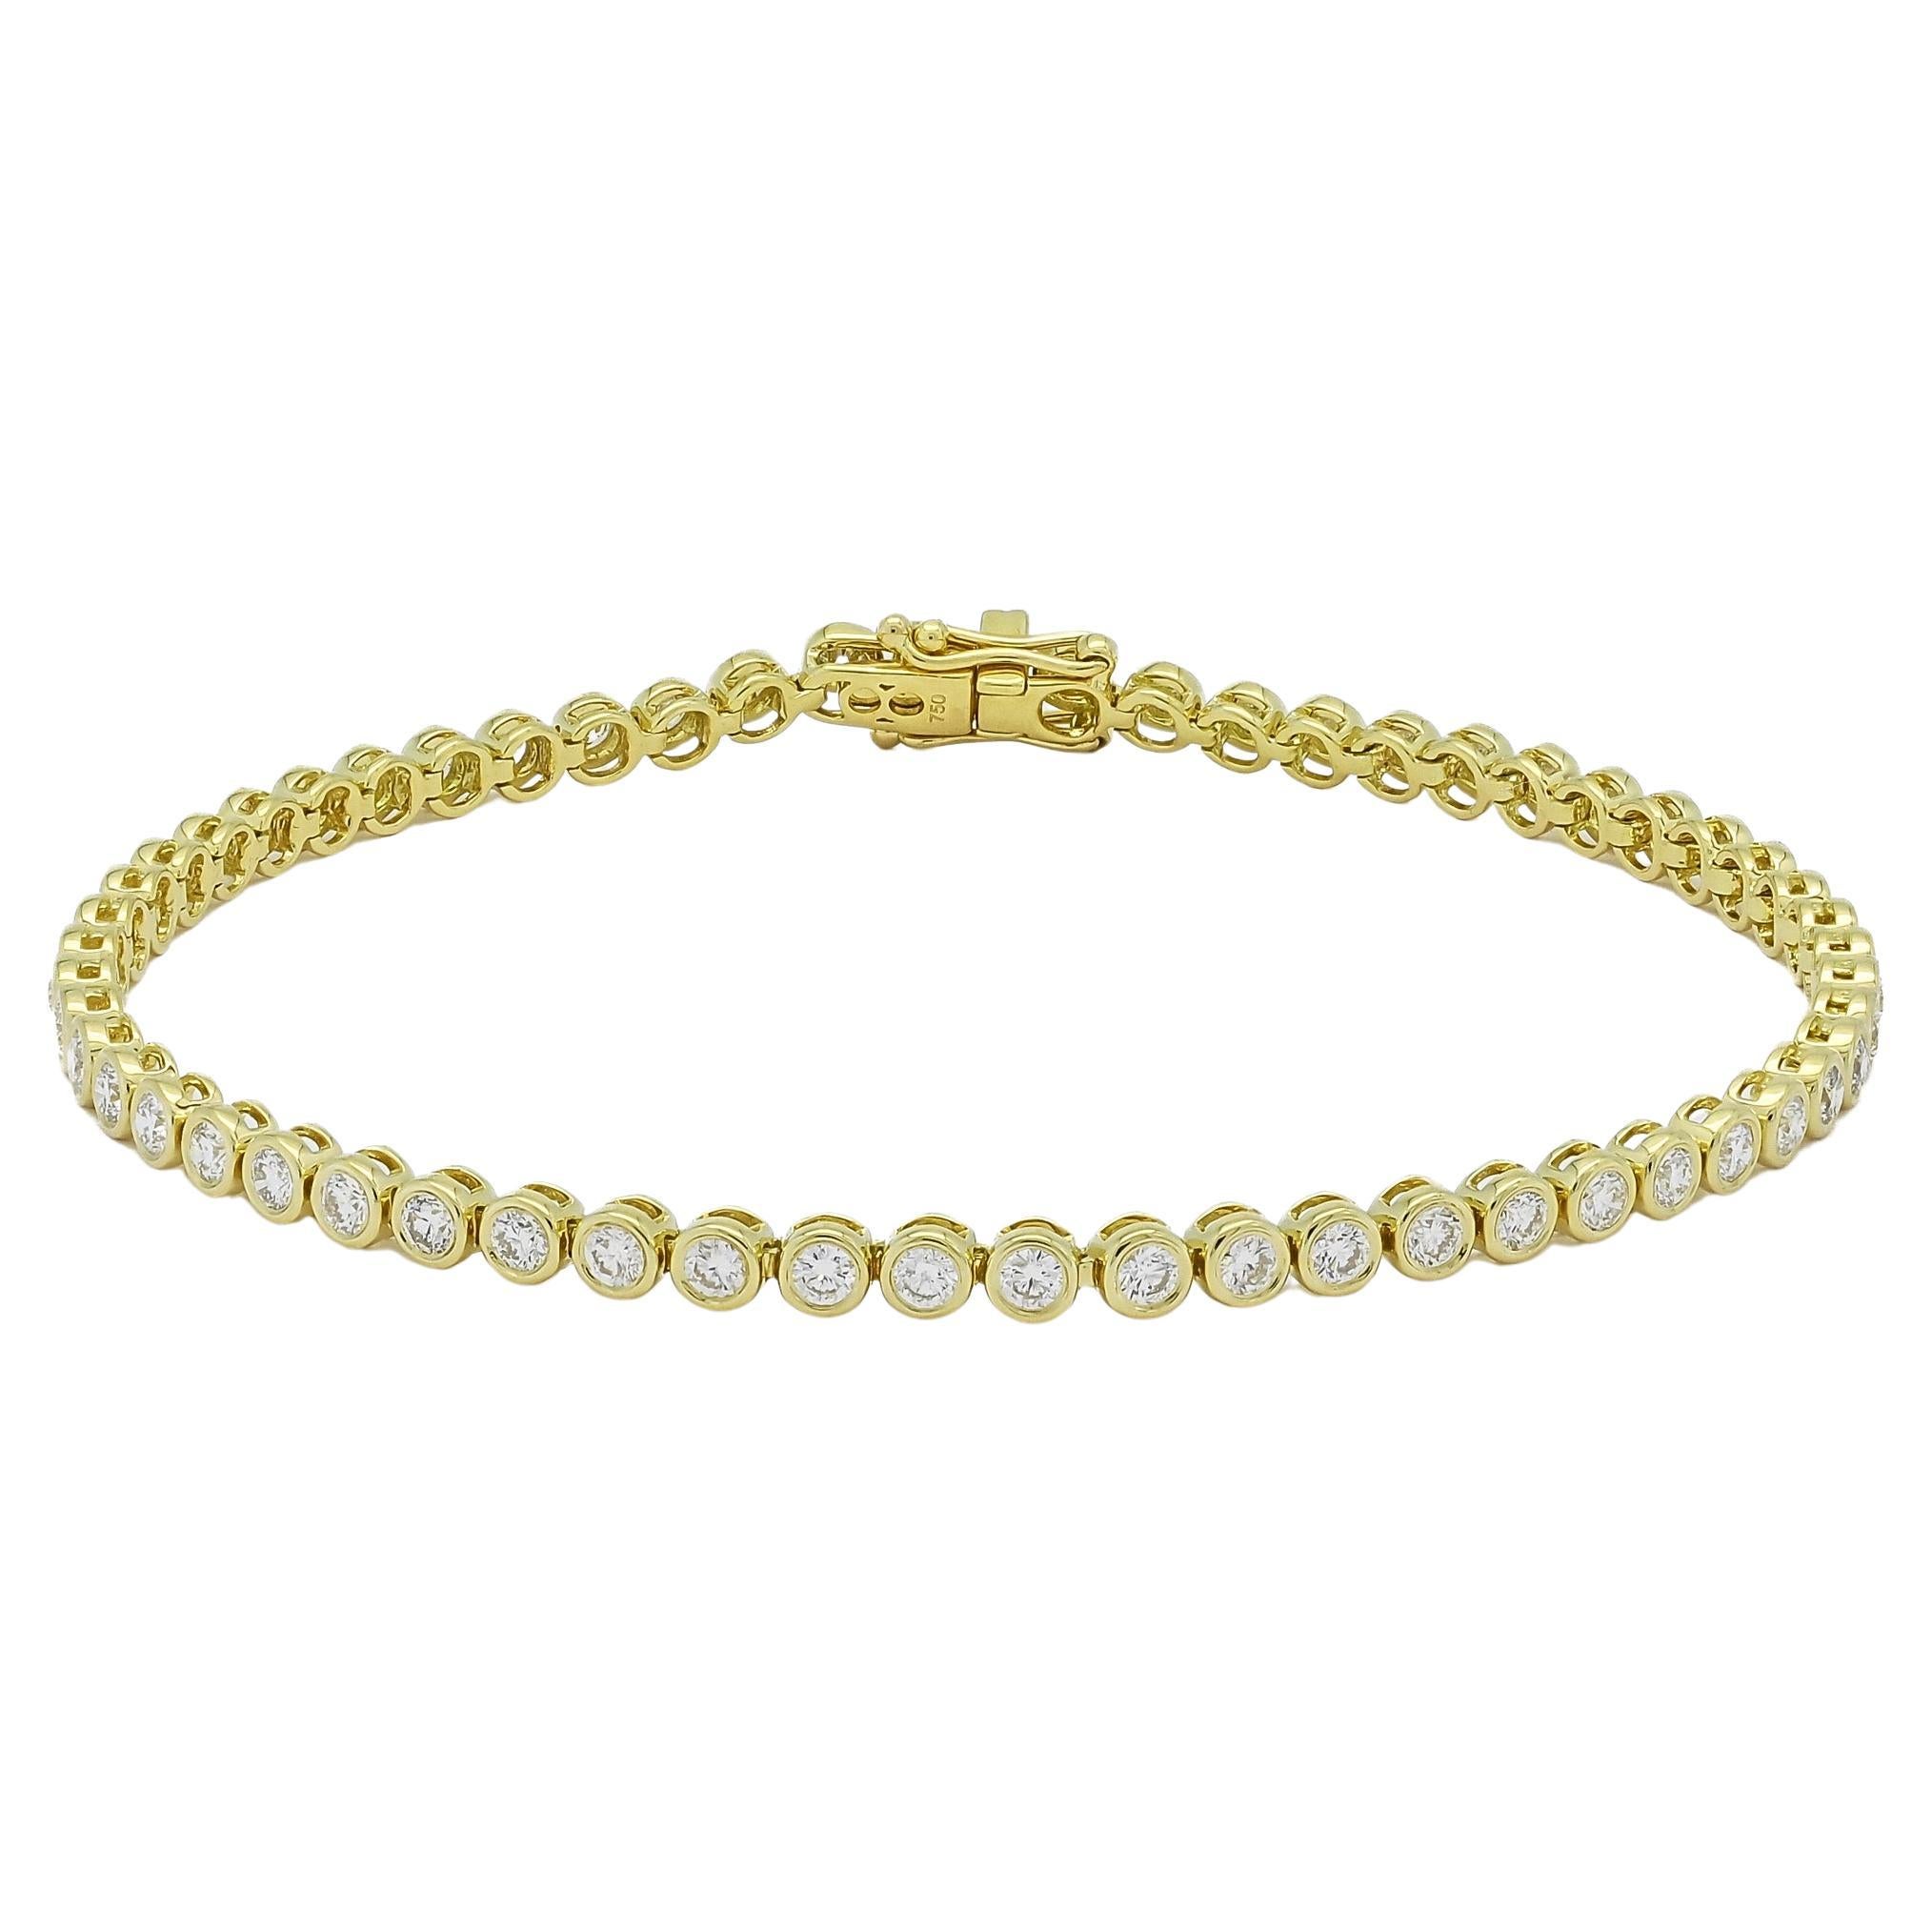 Natural Diamond  2.00 Carat  18k Yellow Gold Tennis Bracelet